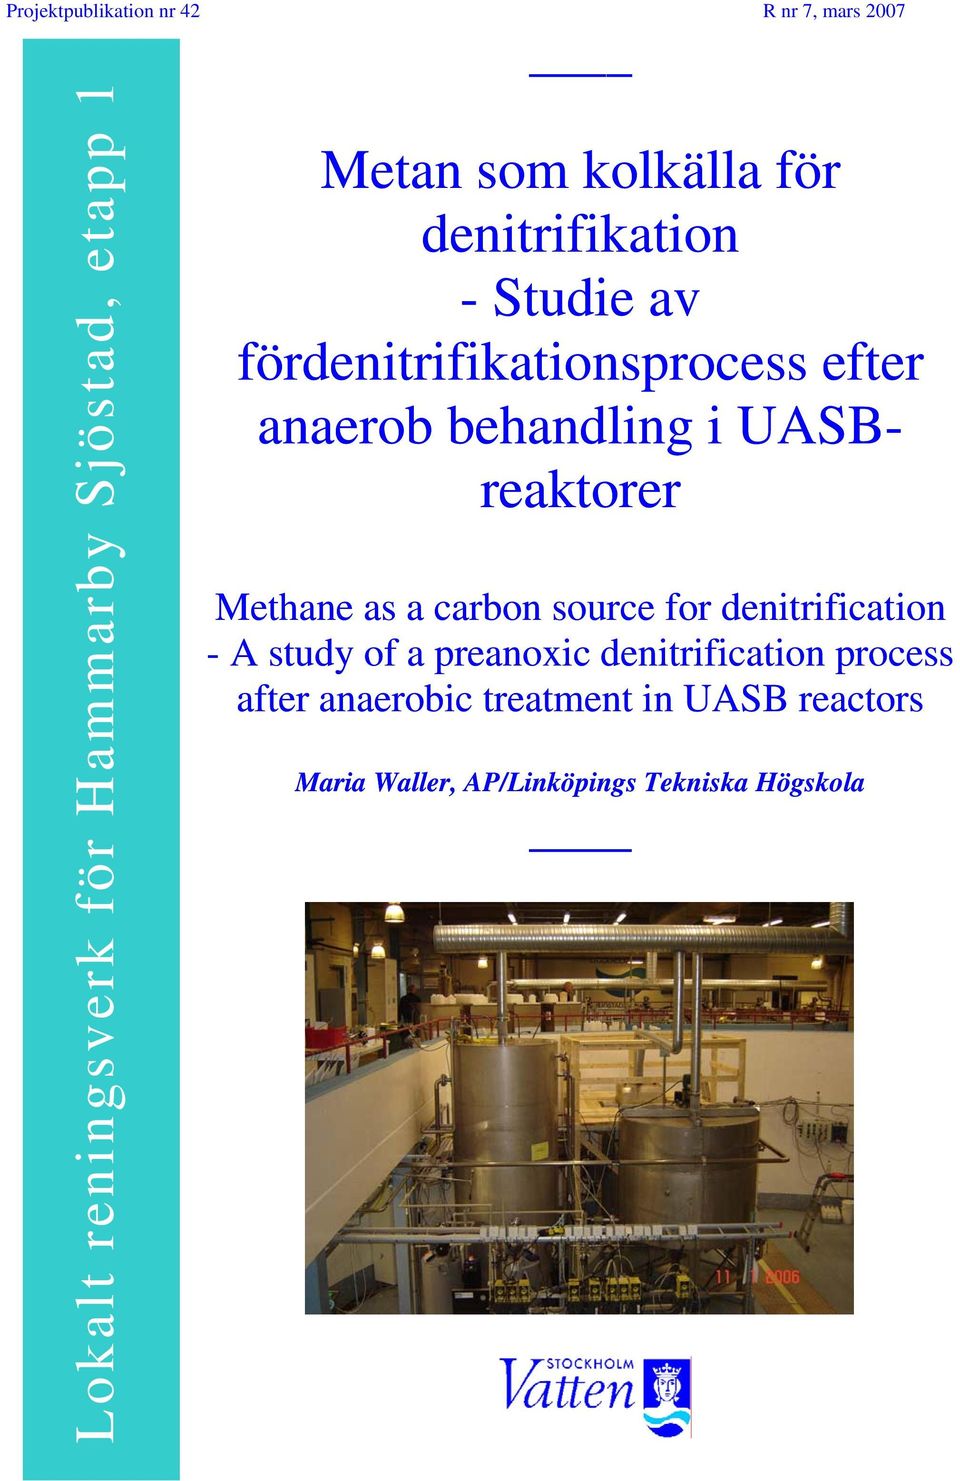 UASBreaktorer Methane as a carbon source for denitrification - A study of a preanoxic